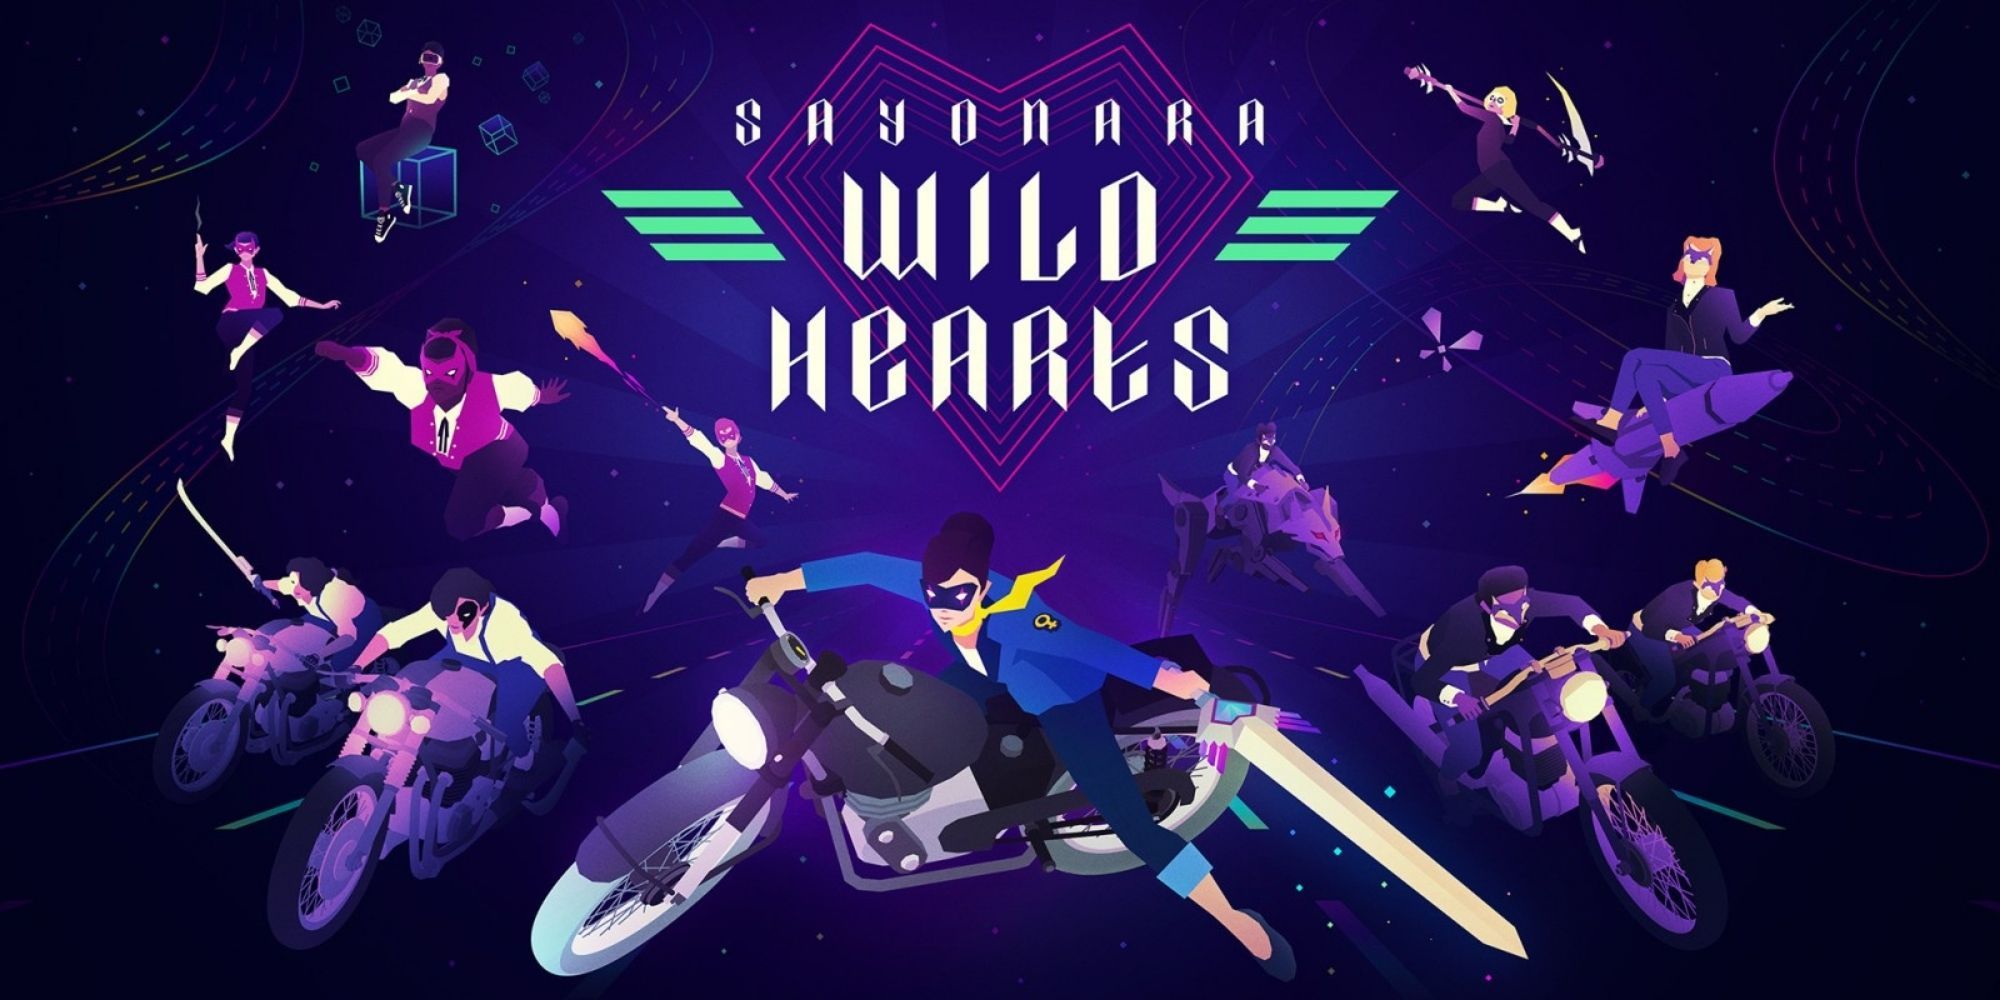 Sayonara Wild Hearts Characters Ride Vehicles Towards You On A Dark Highway